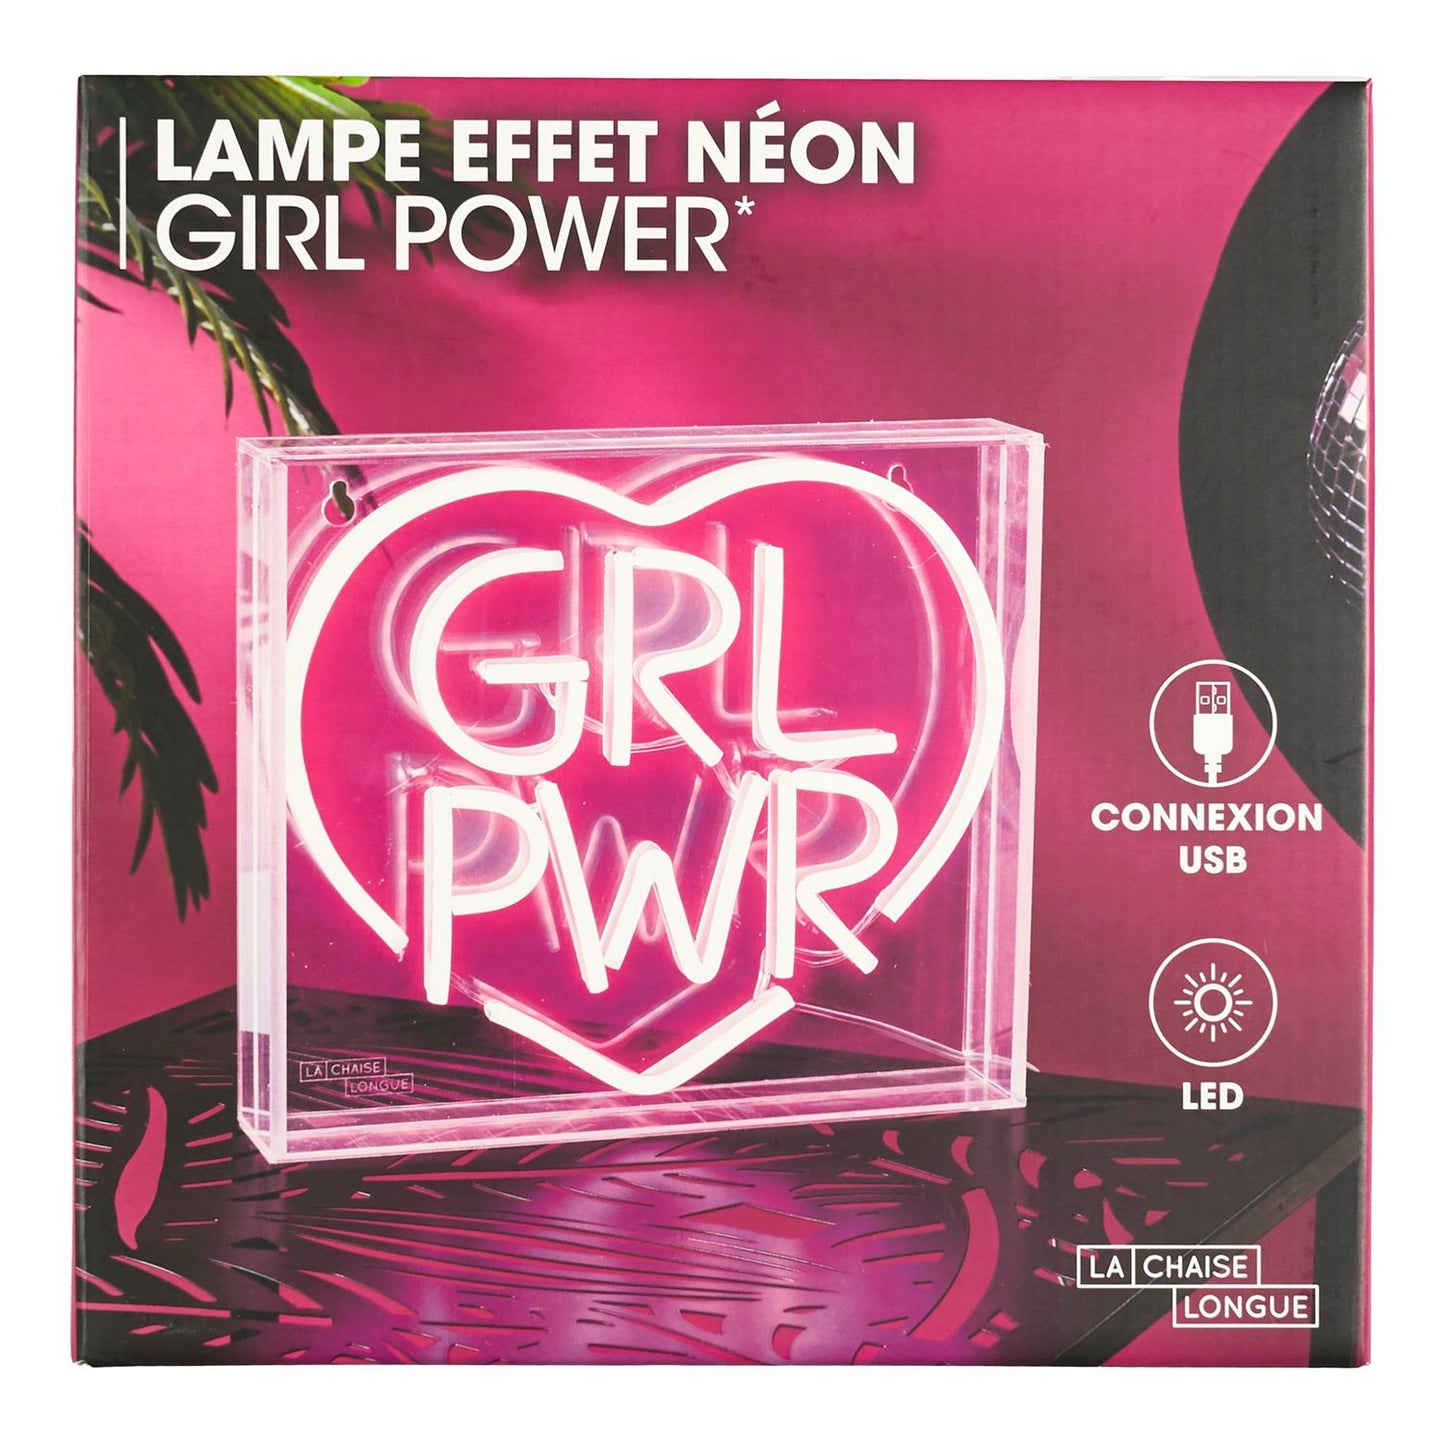 LAMPE EFFET NEON GIRL POWER